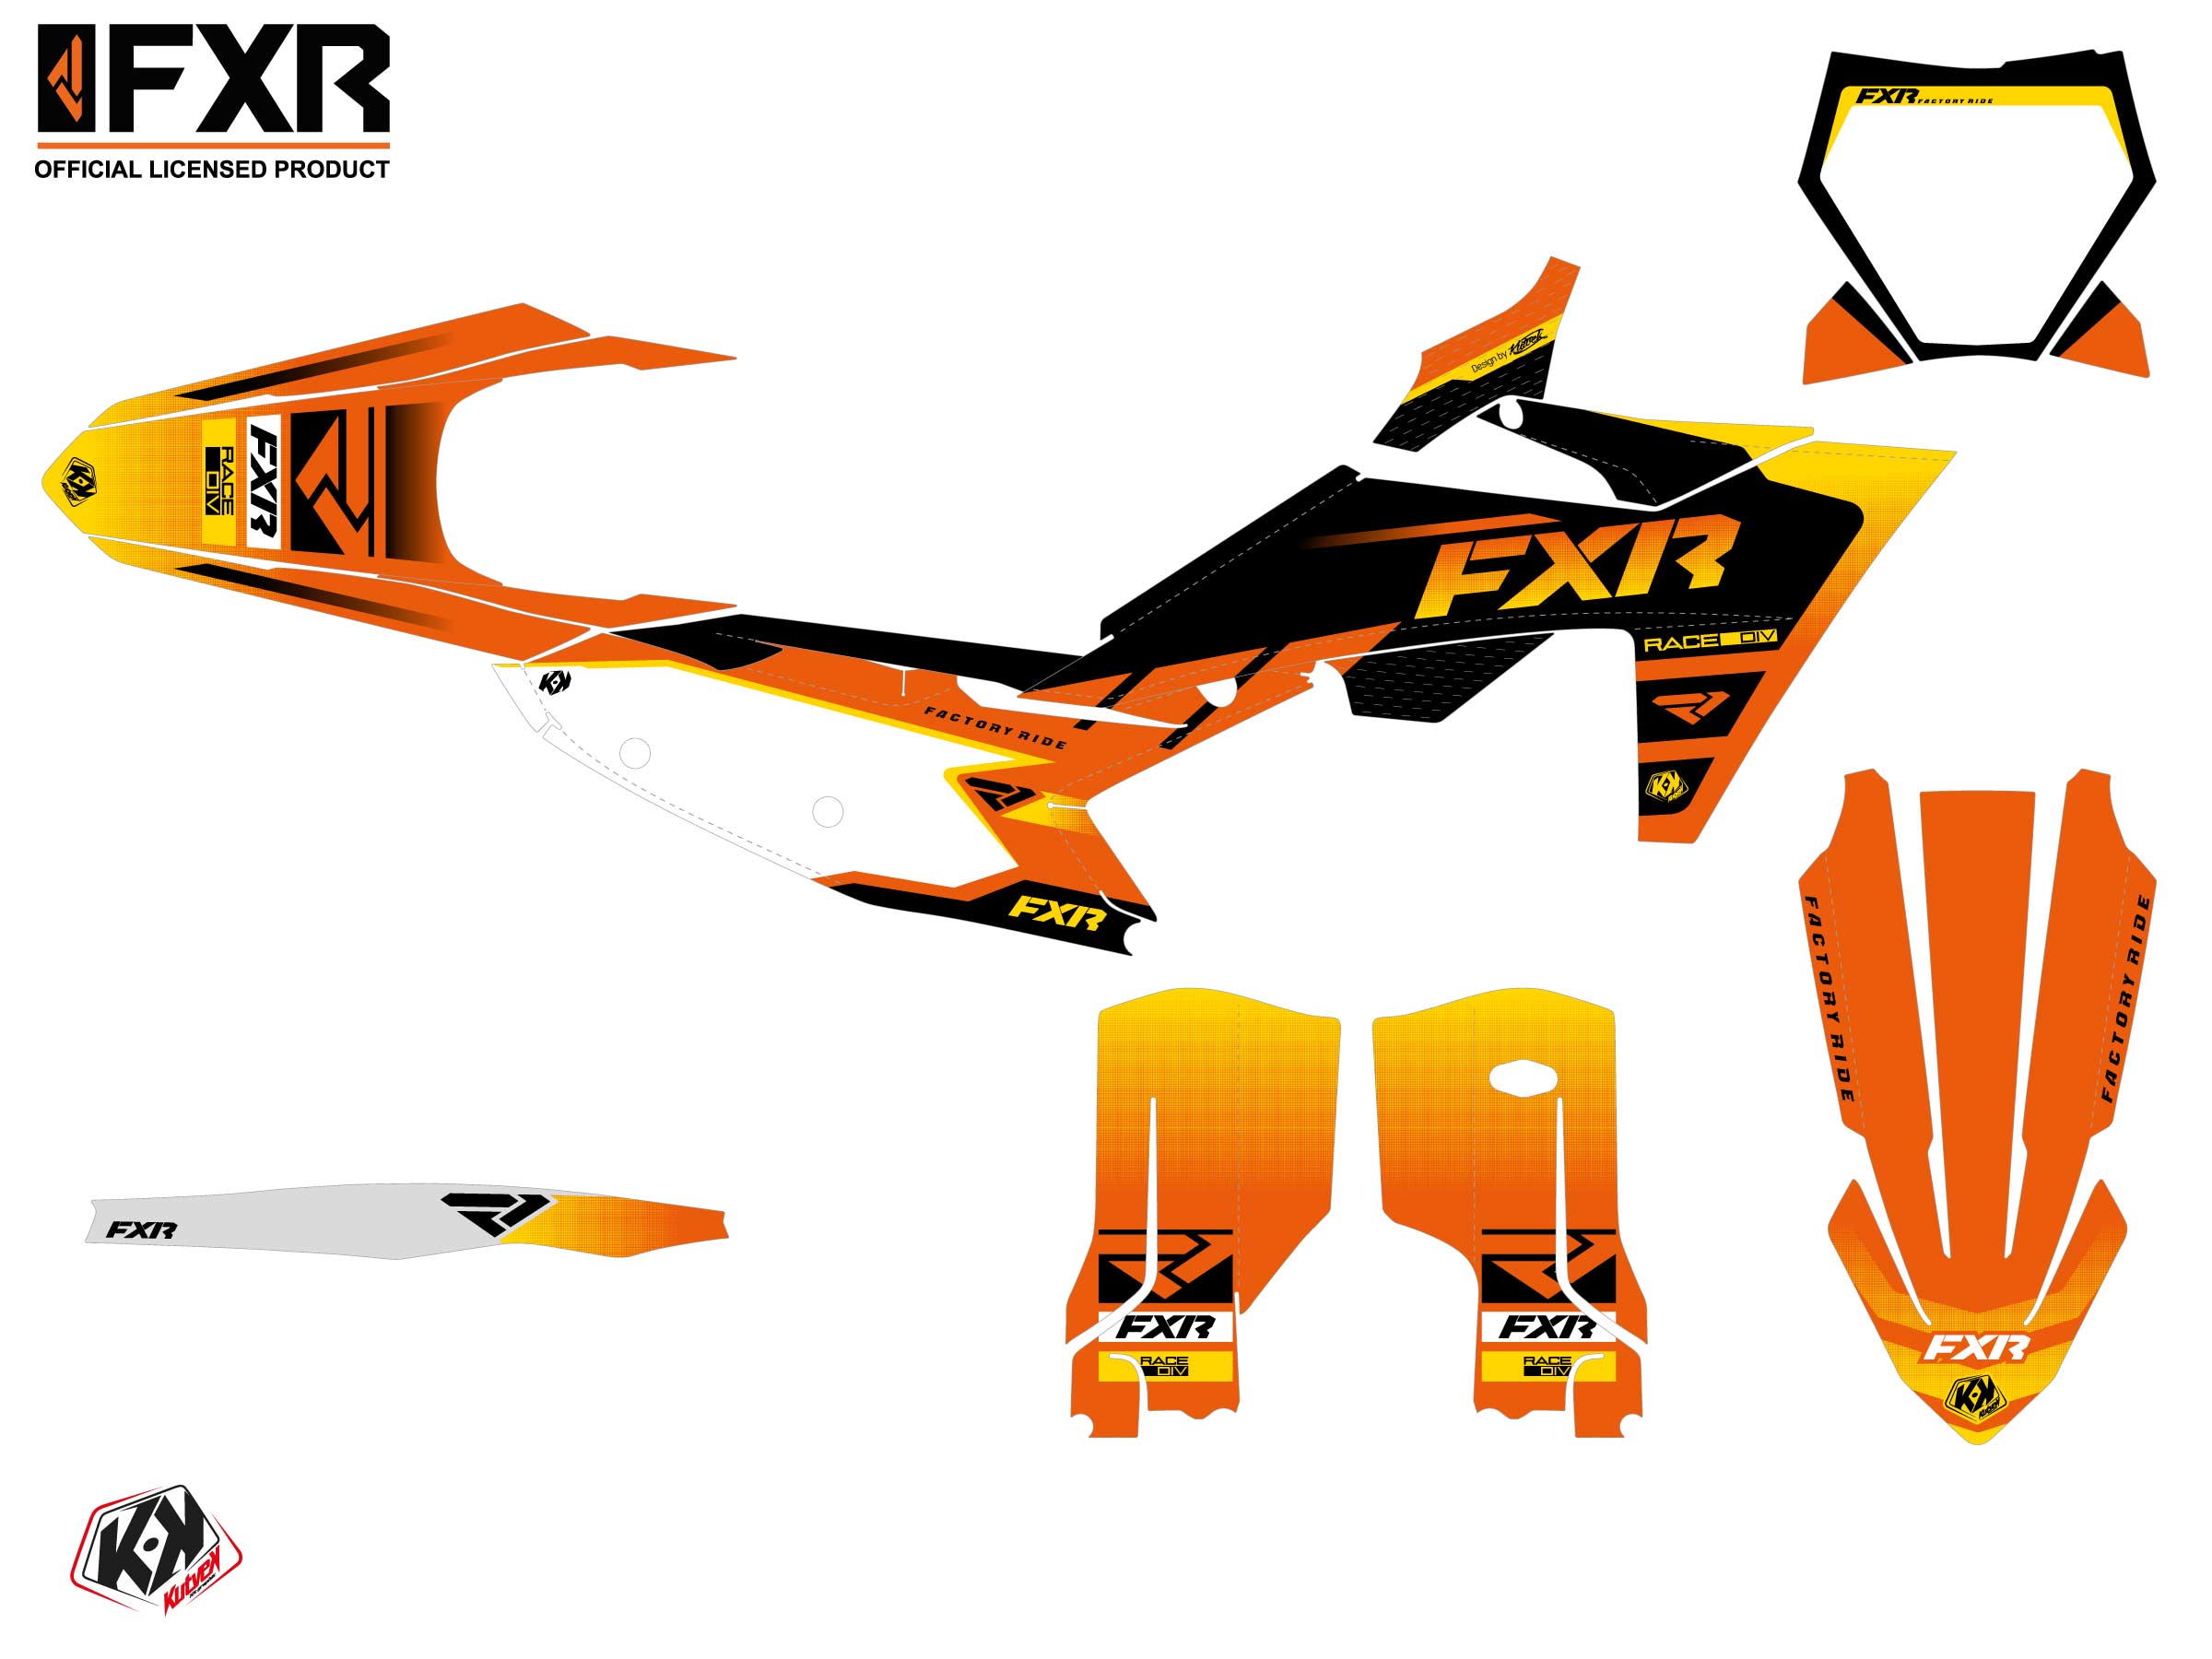 Kit Déco Motocross Fxr Revo Ktm Sx 450 F Orange